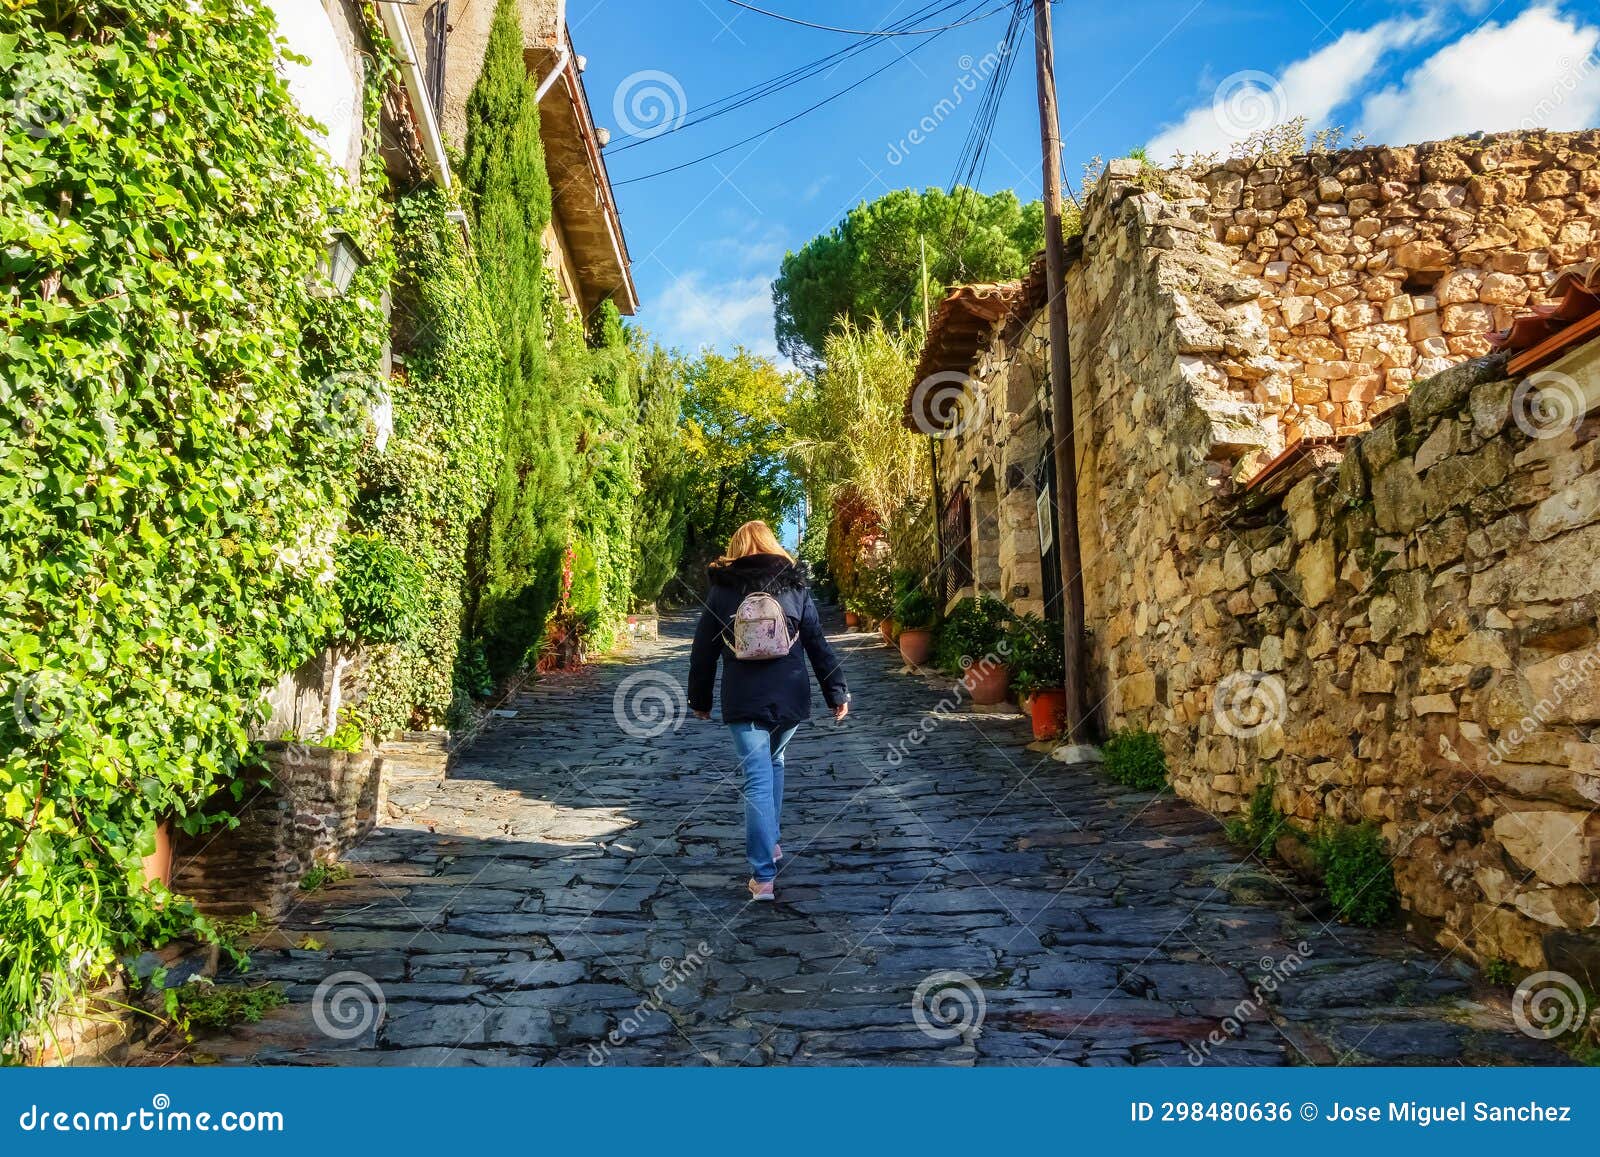 woman walking up a sloping street in the old stone village, patones de arriba.